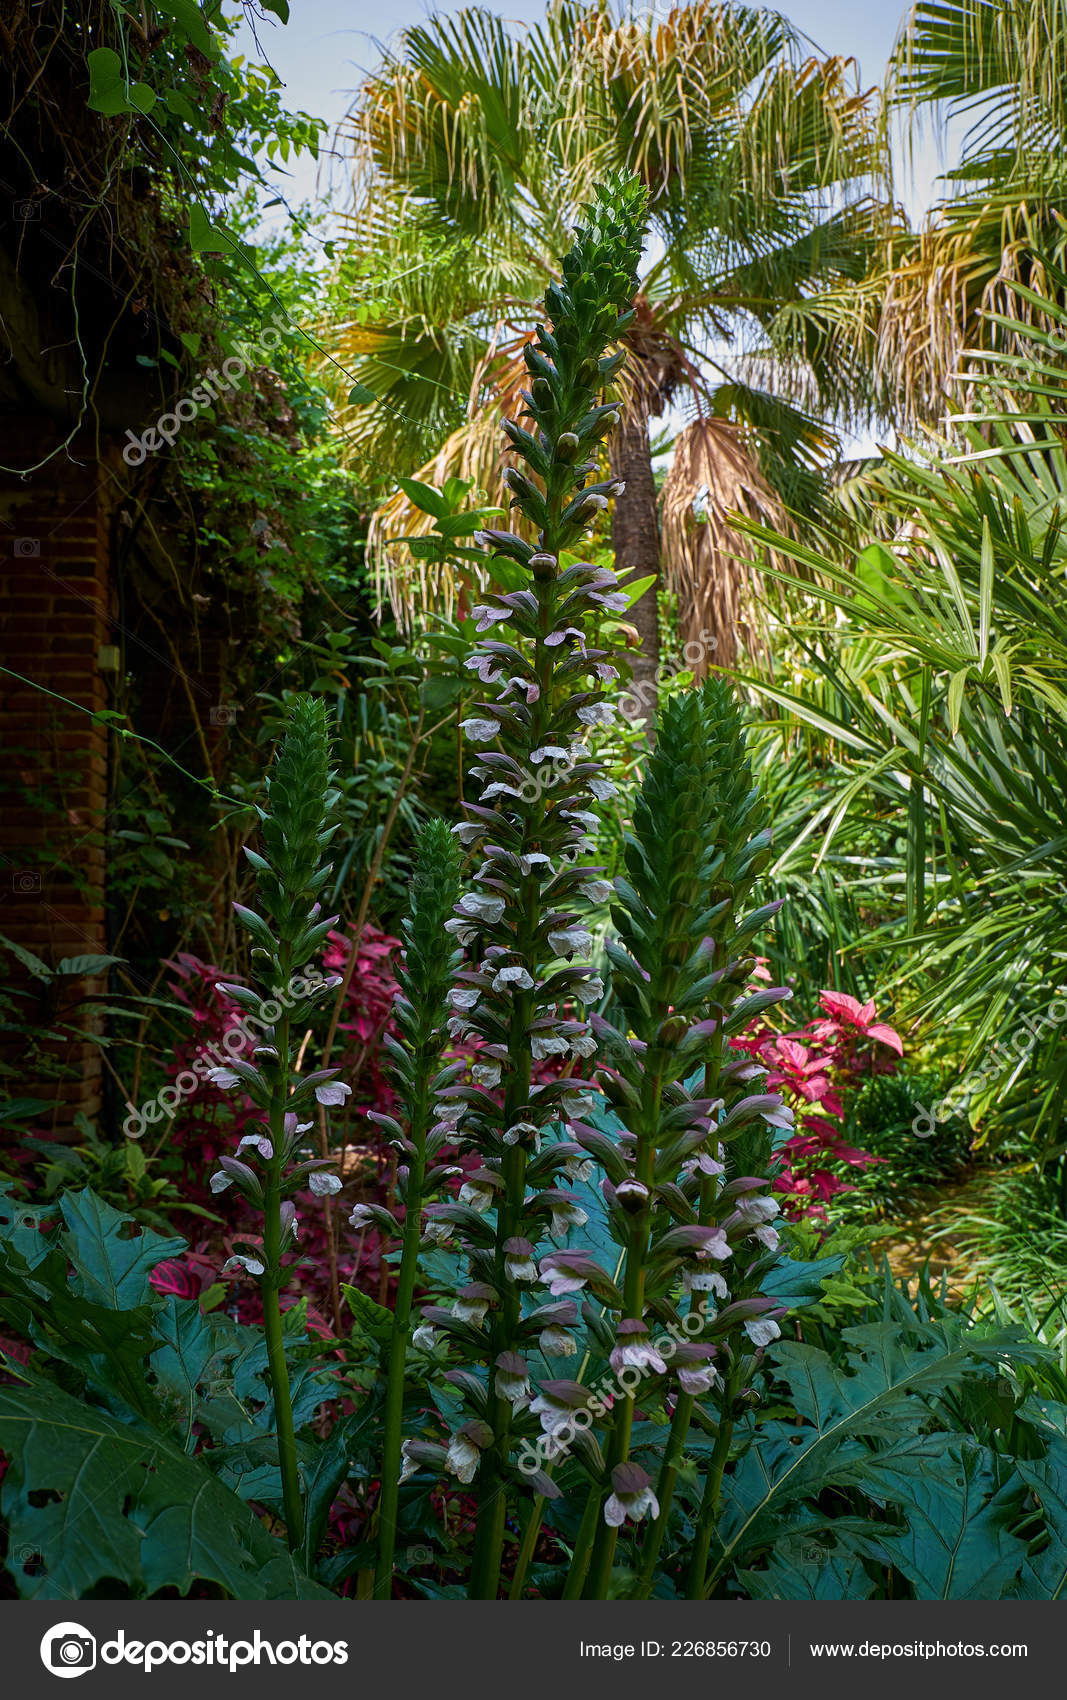 depositphotos stock photo marimurtra botanical garden blanes catalonia